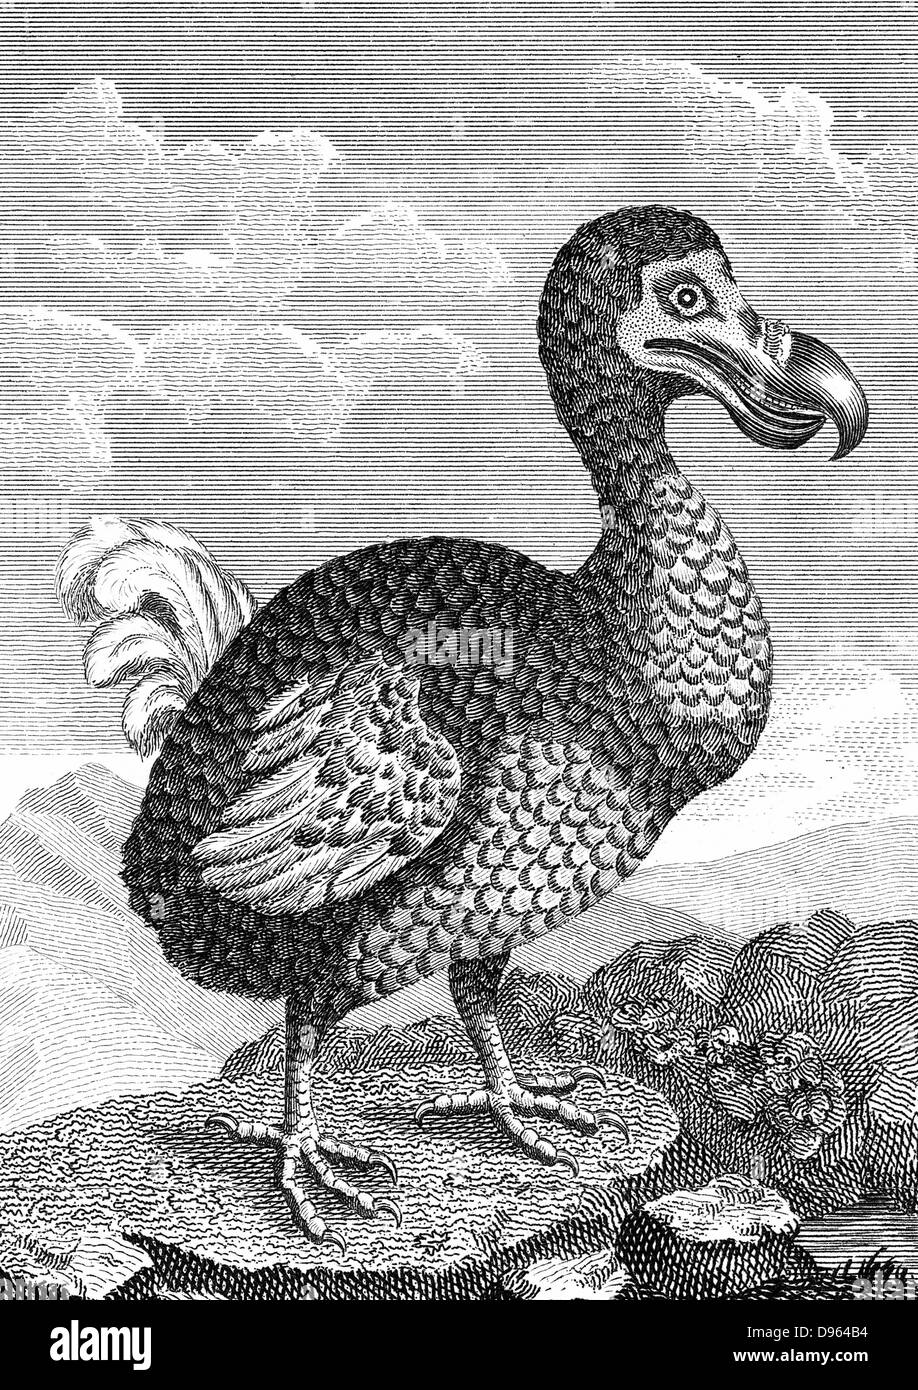 Extinct Dodo Bird Stock Photos & Extinct Dodo Bird Stock Images - Alamy